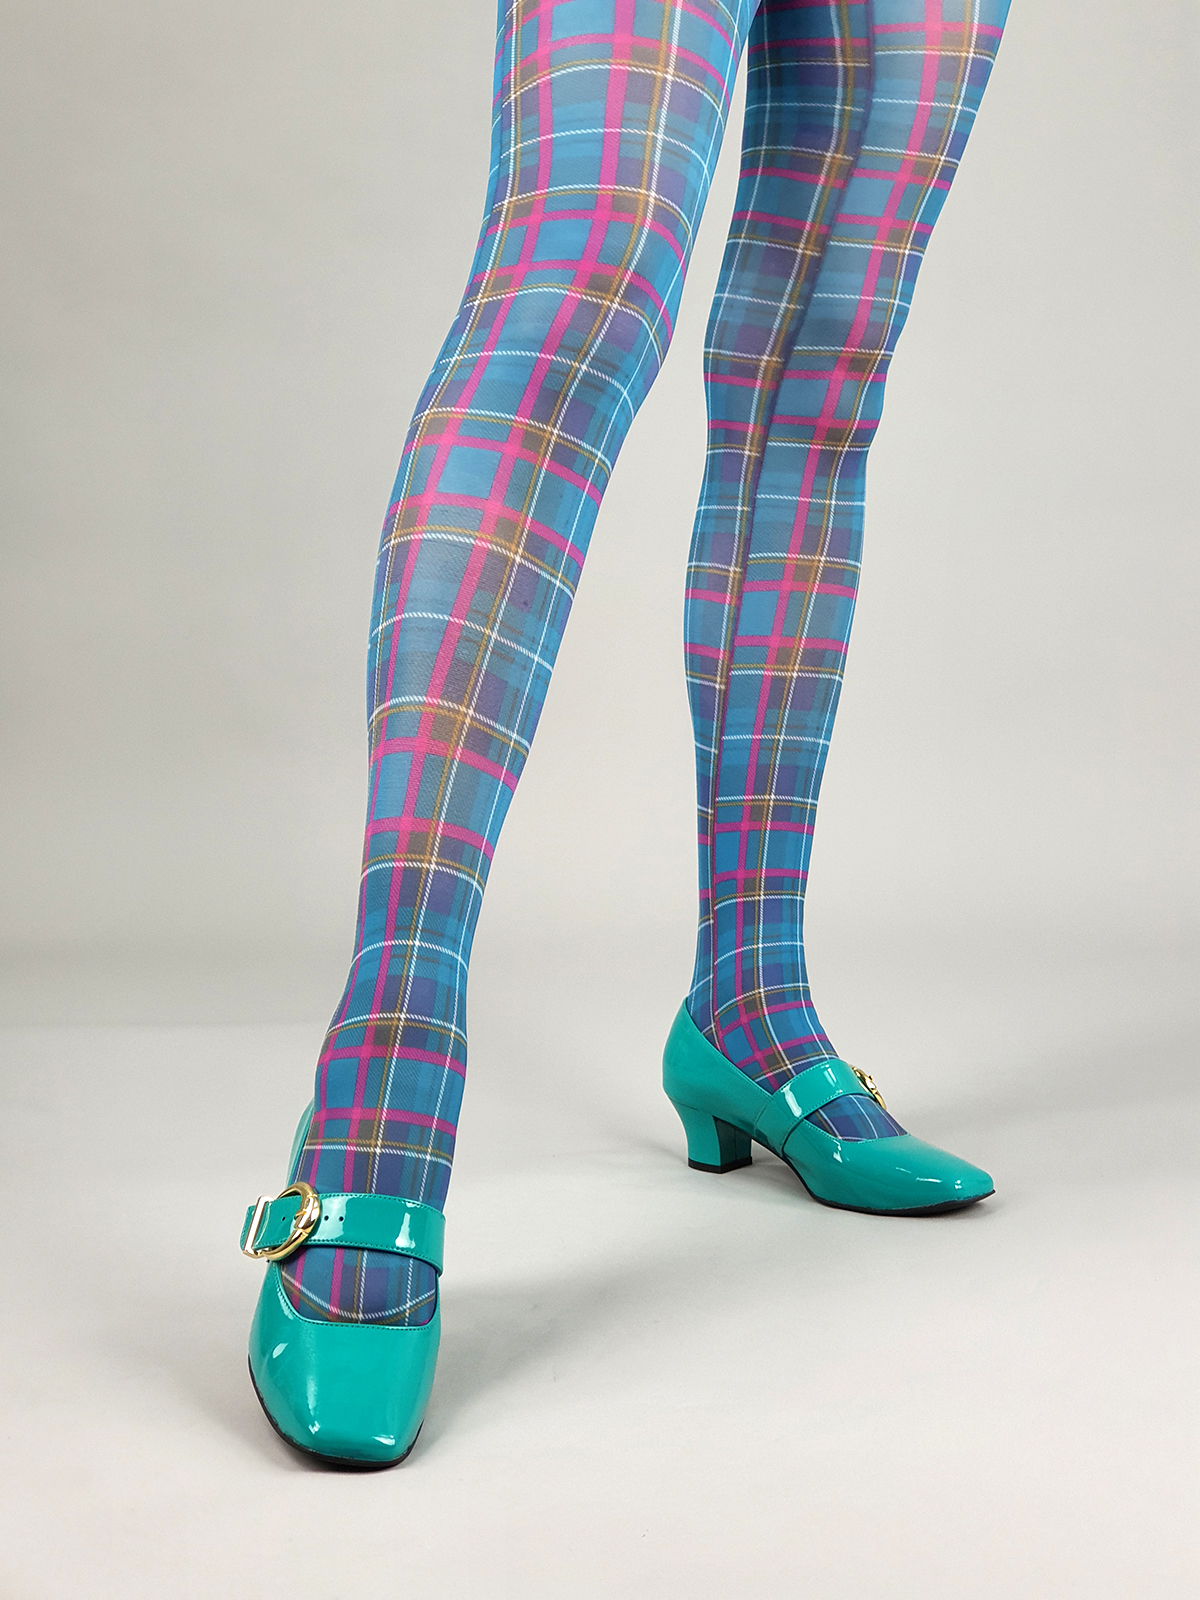 https://www.modshoes.co.uk/wp-content/uploads/2020/11/modshoes-ladies-vintage-retro-mod-skin-ska-tights20201119_190847.jpg